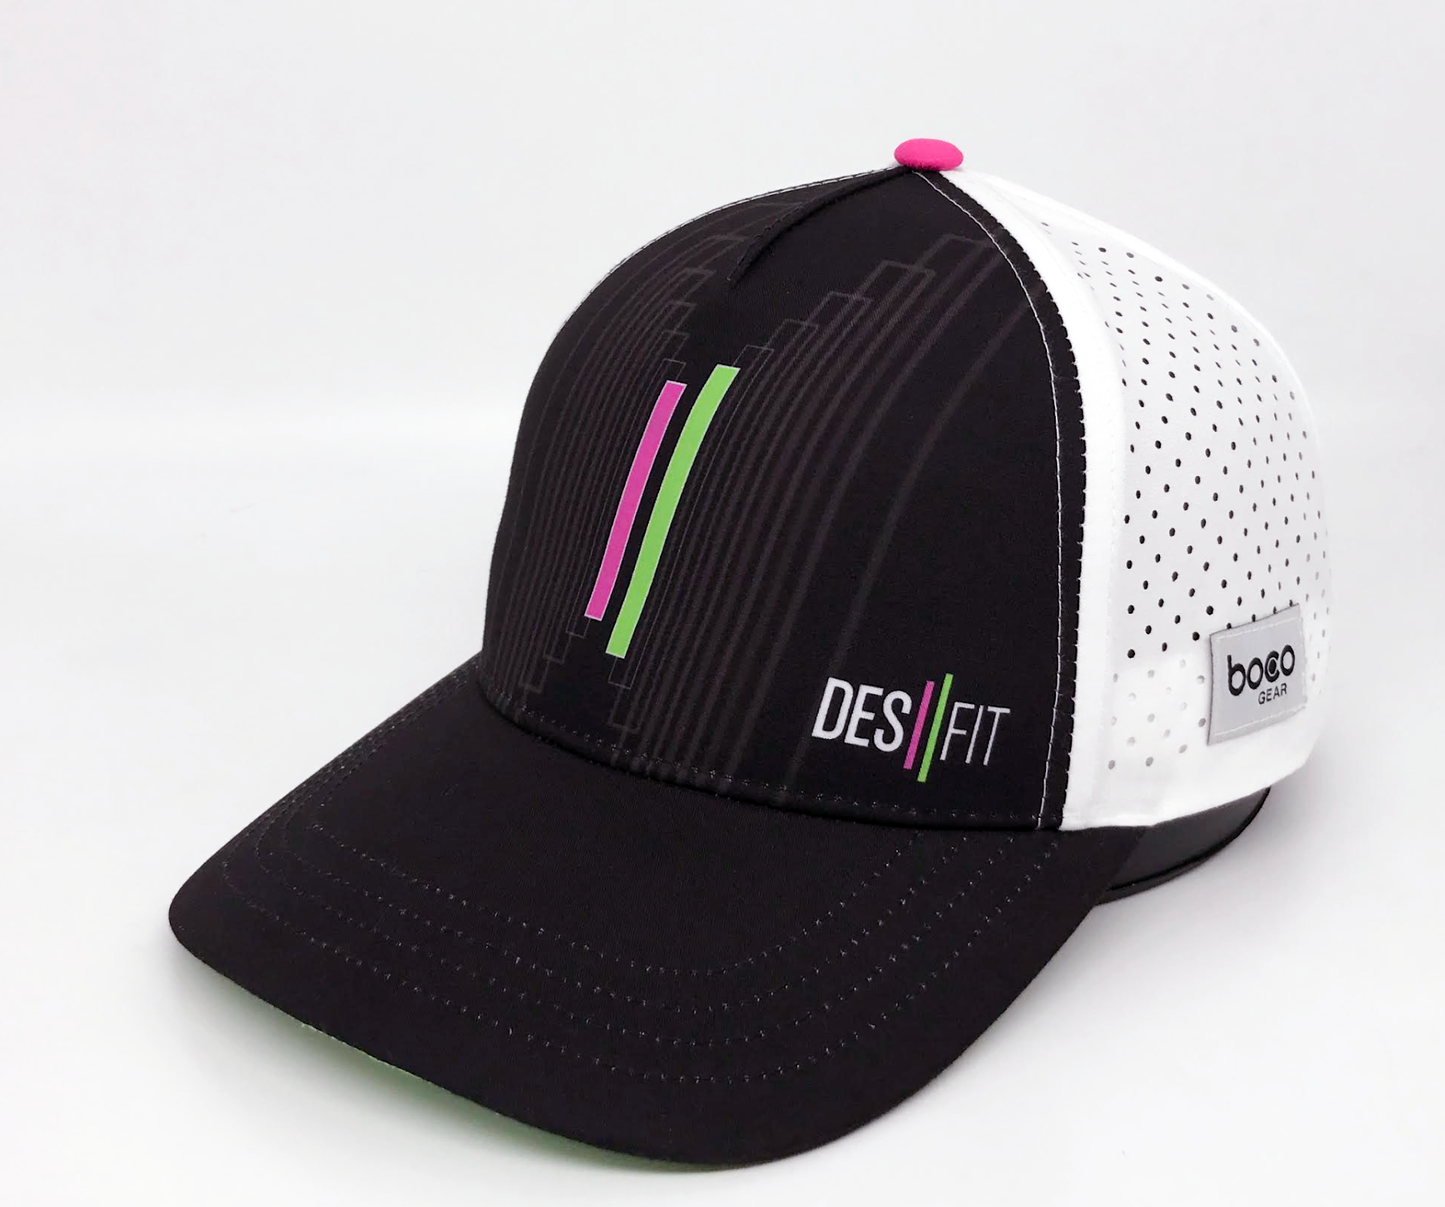 DesFit Original Running Trucker Hat (by BoCo Gear)